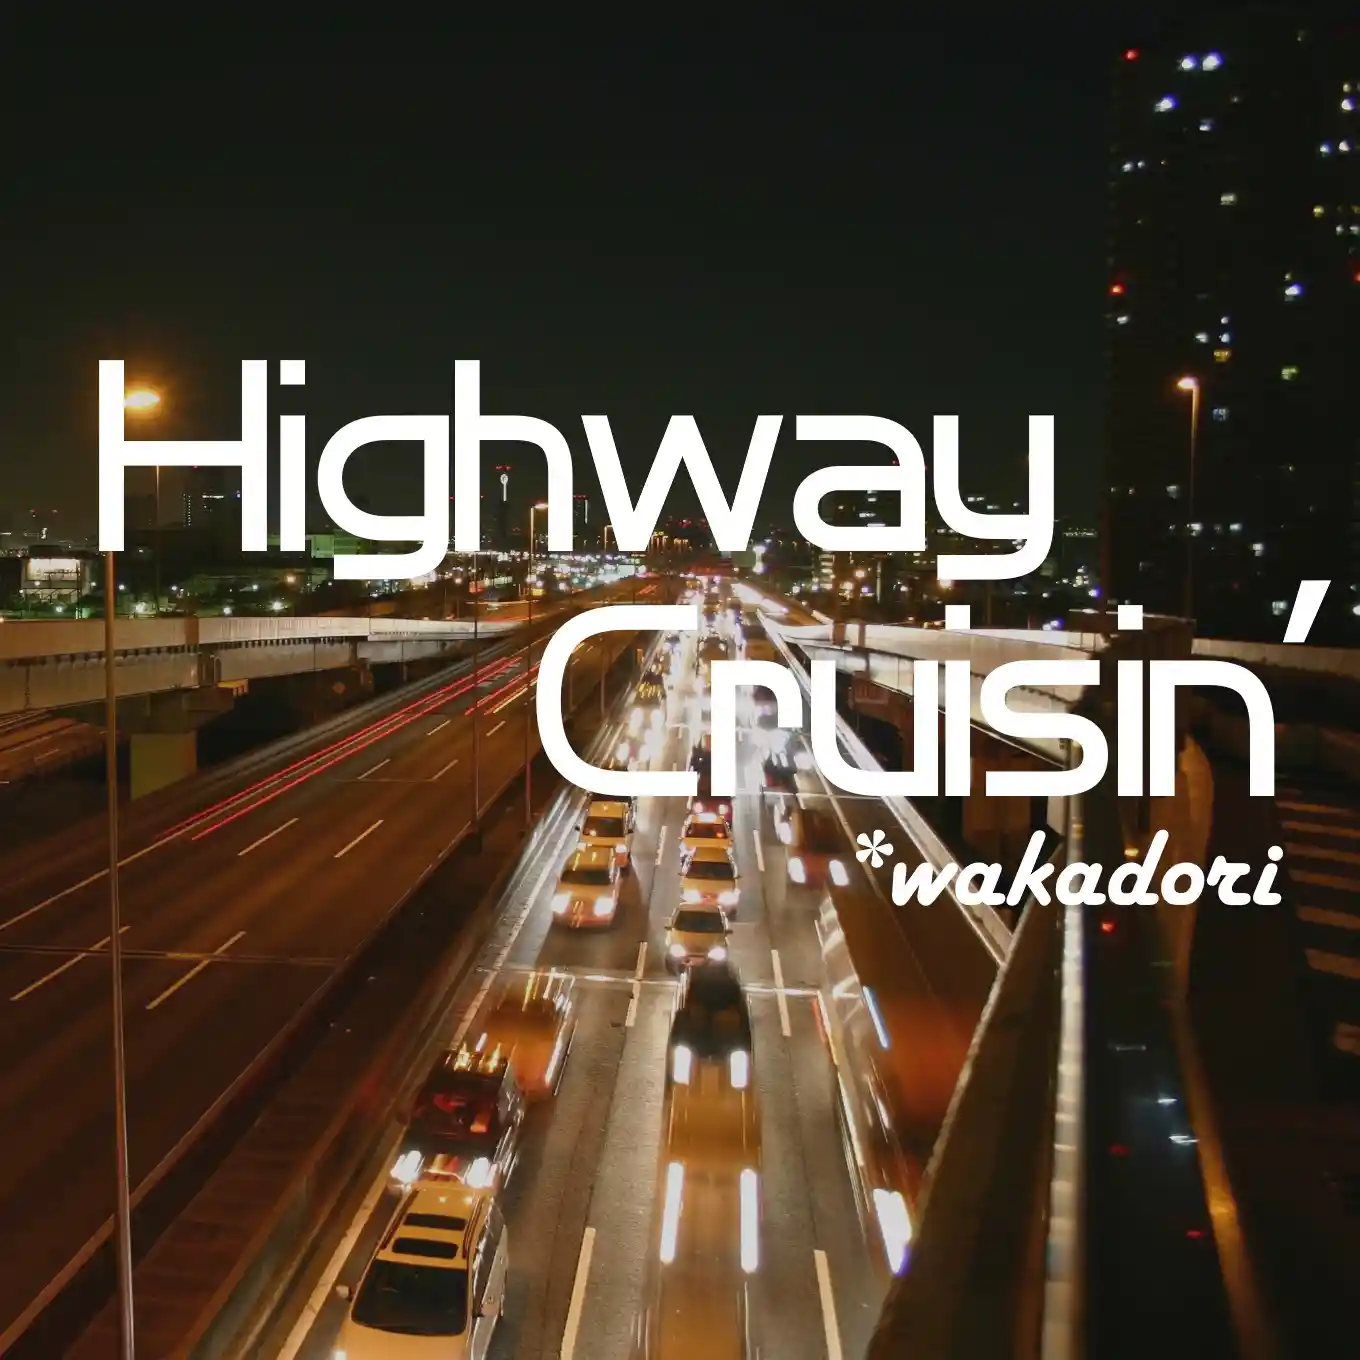 Highway Cruisin'.jpg